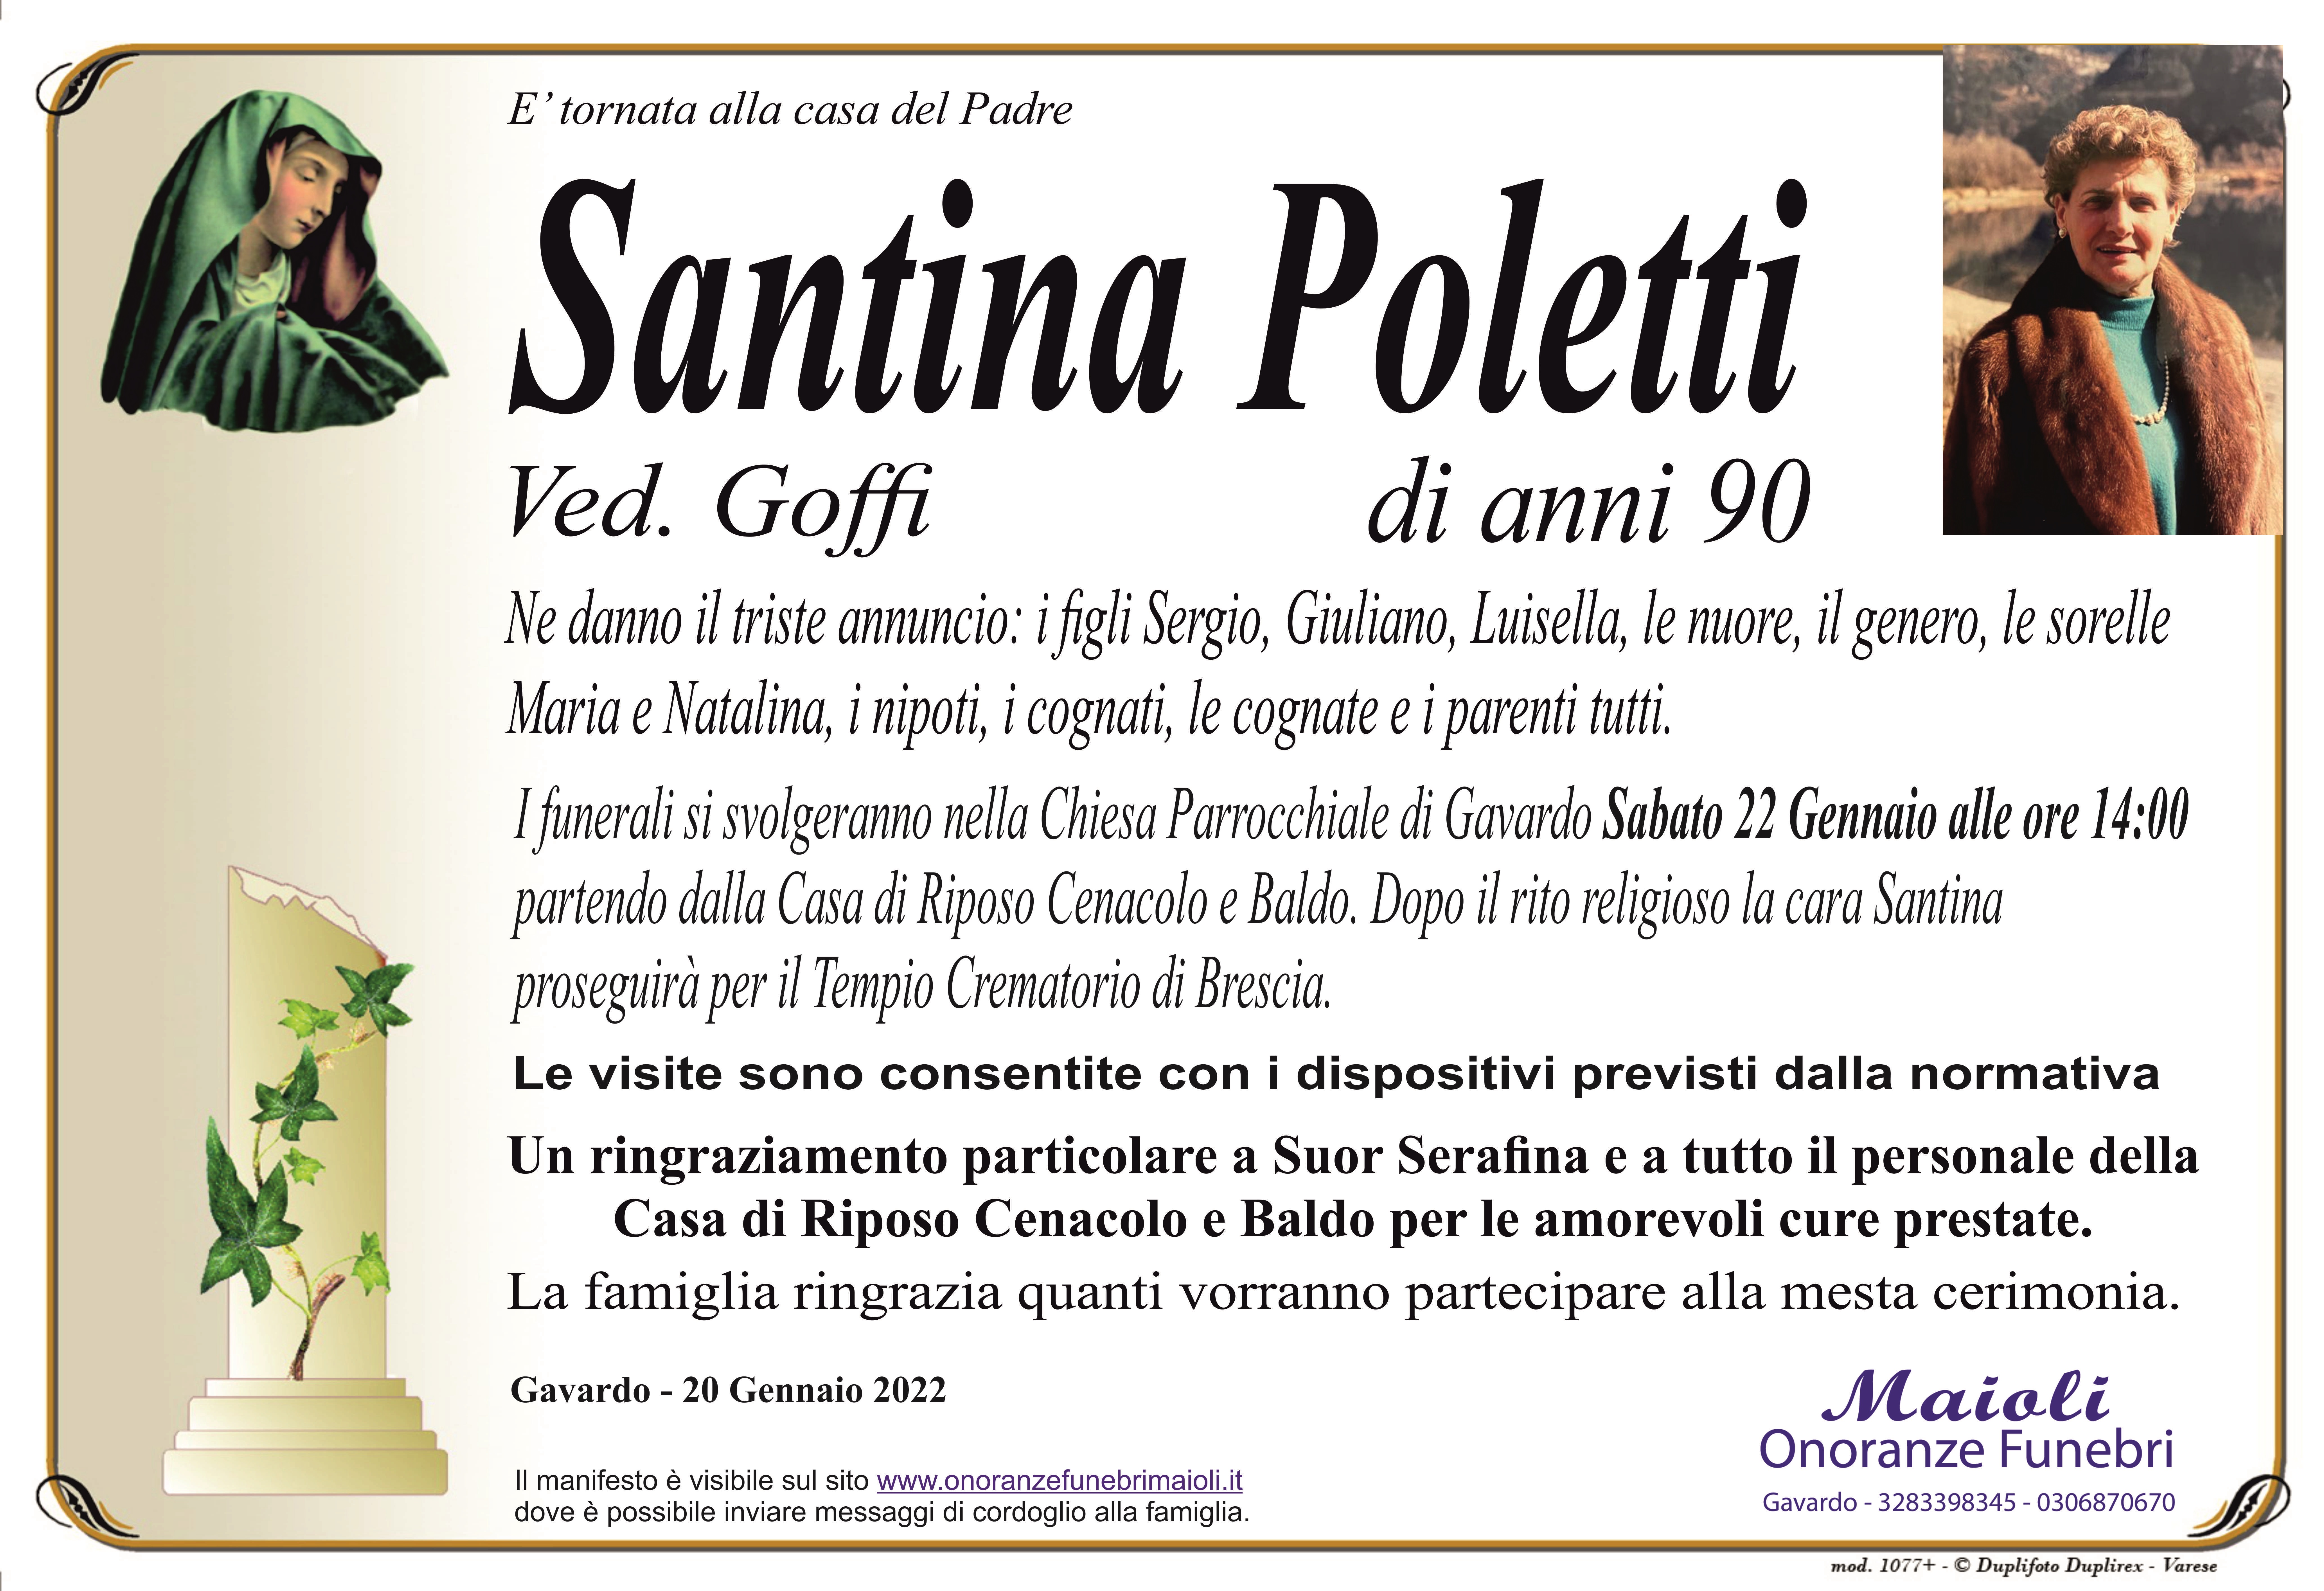 Santina Poletti